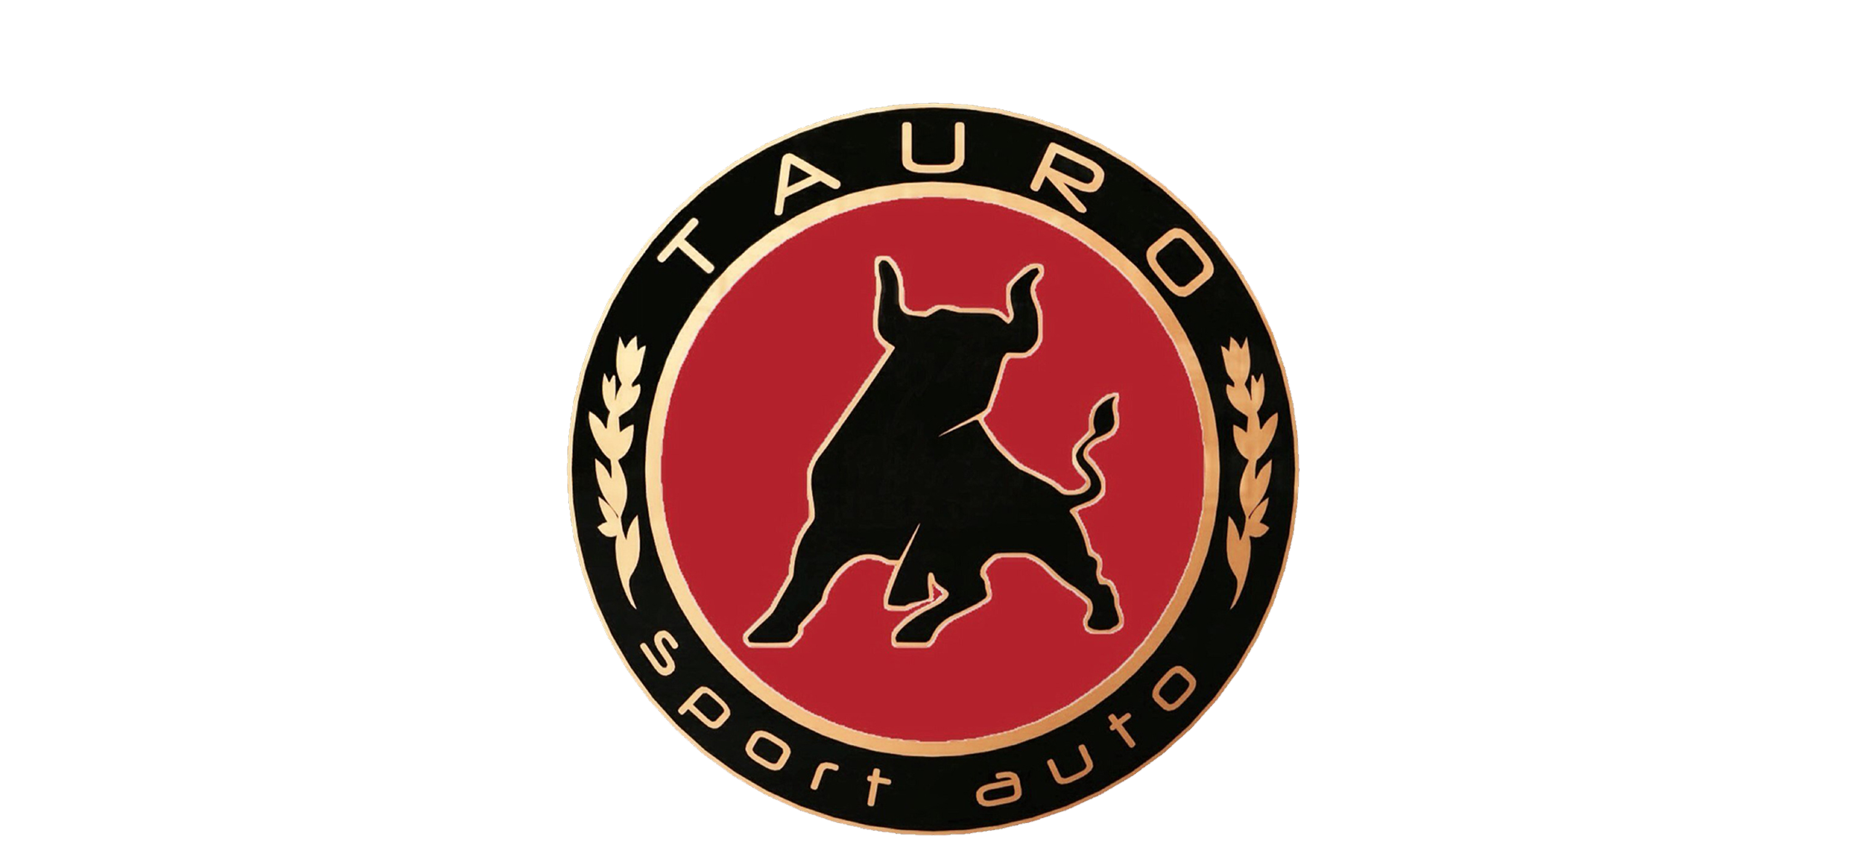 TAURO SPORT logo image